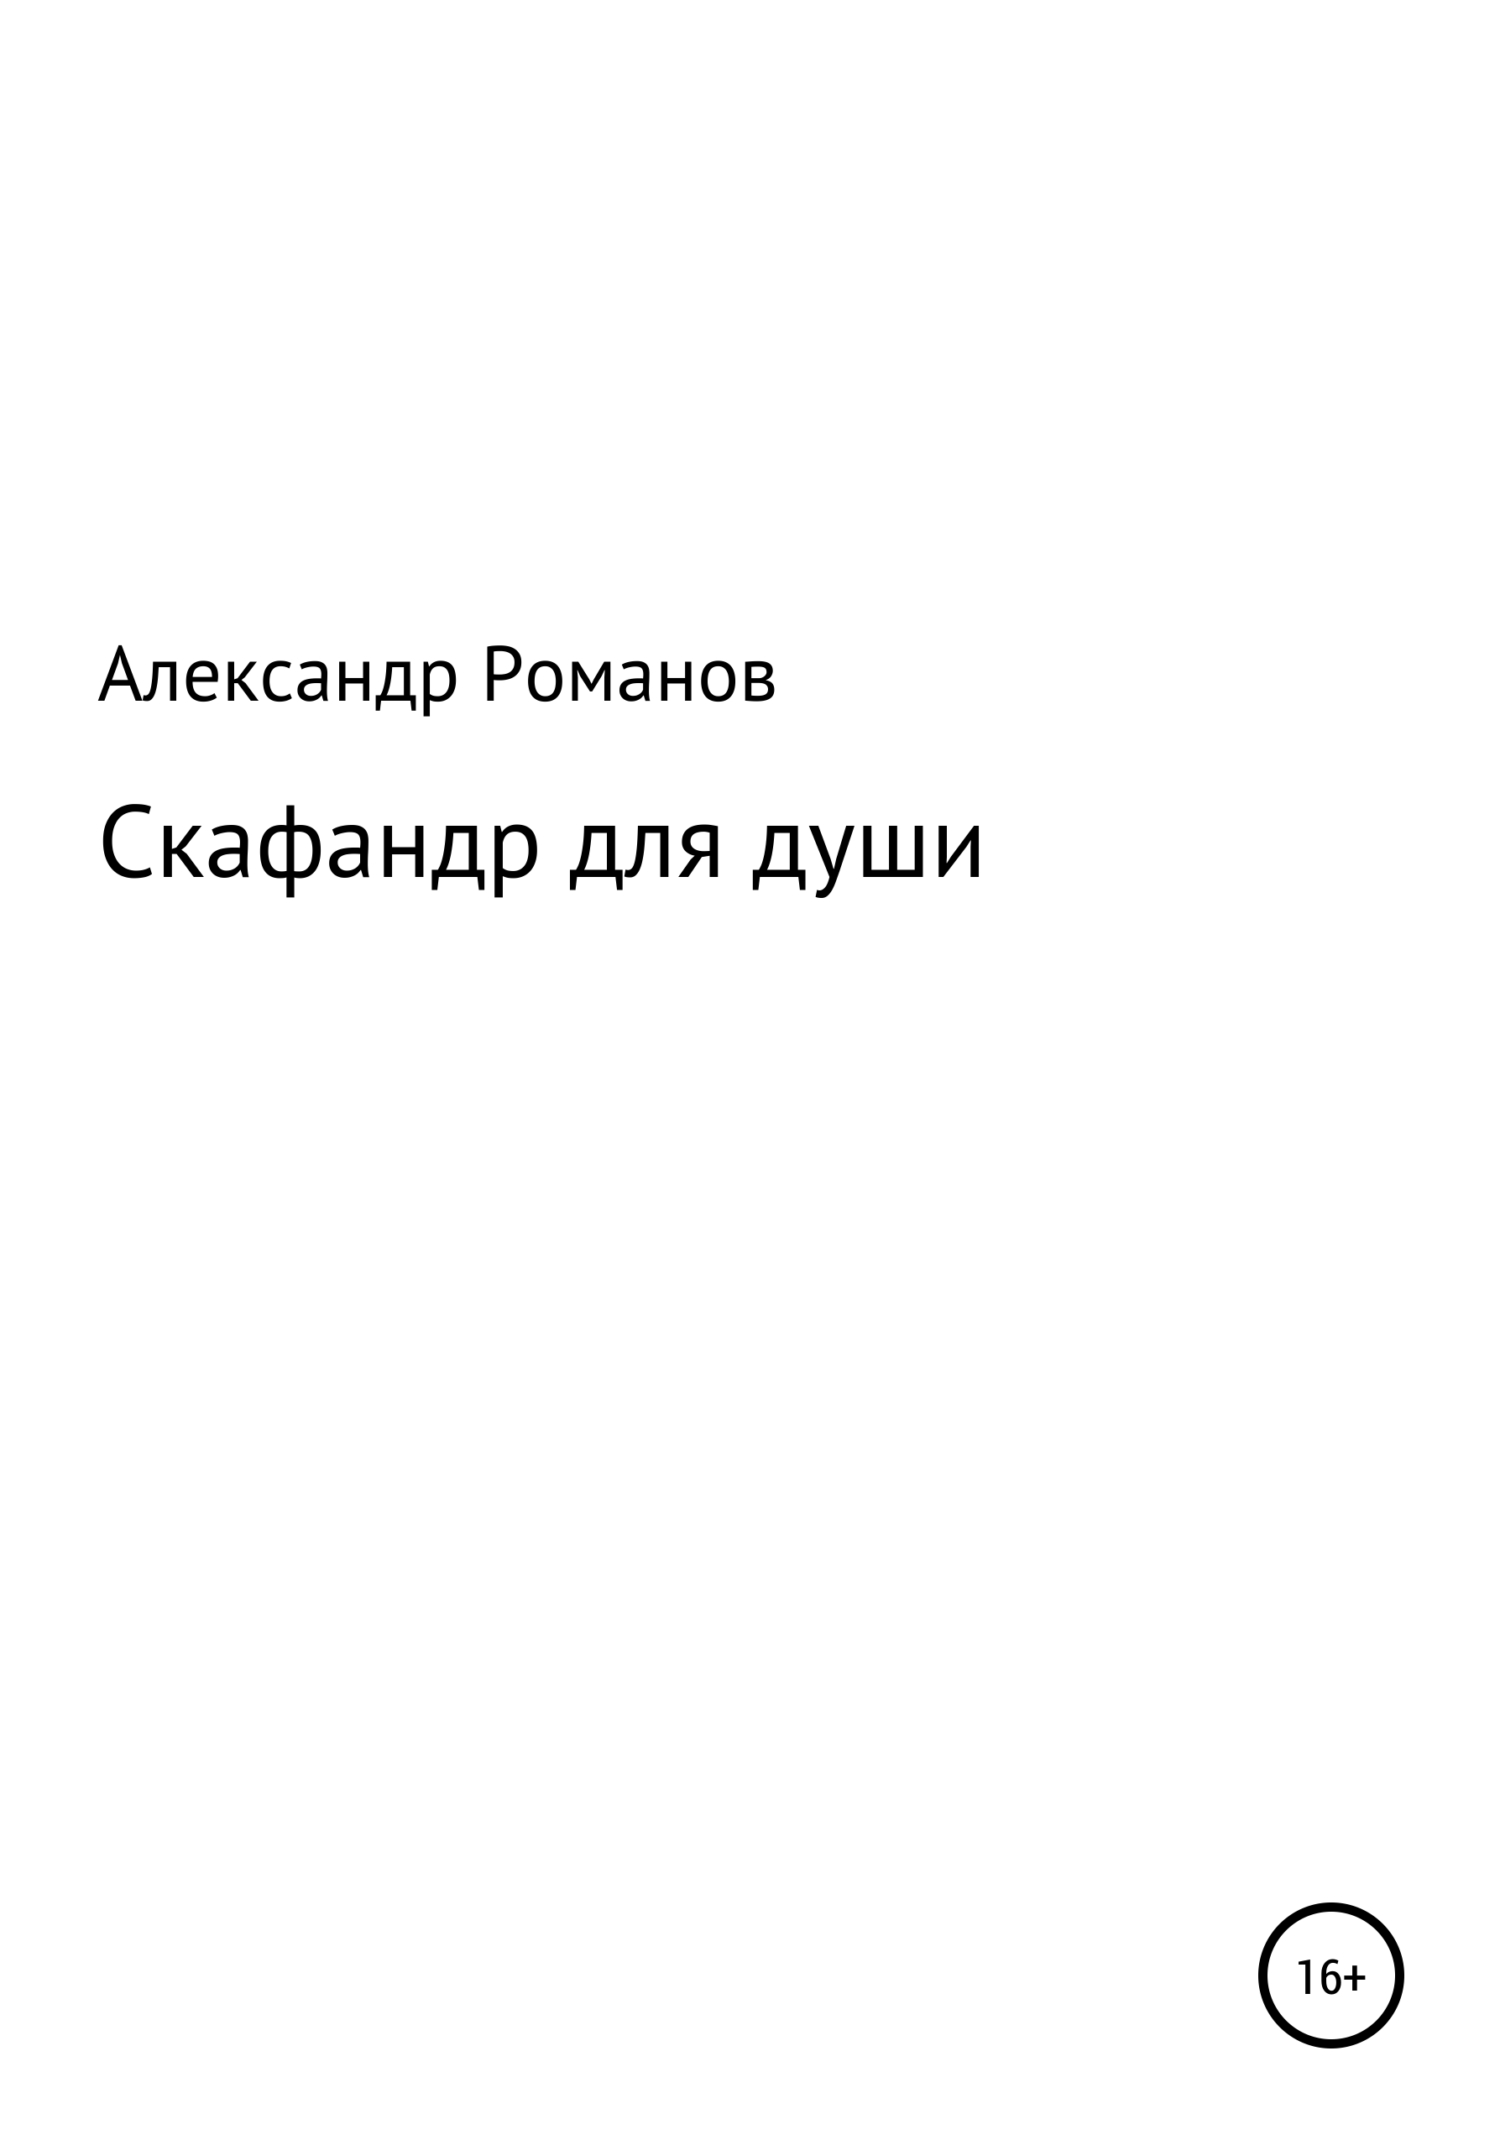 Скафандр для души - Александр Анатольевич Романов